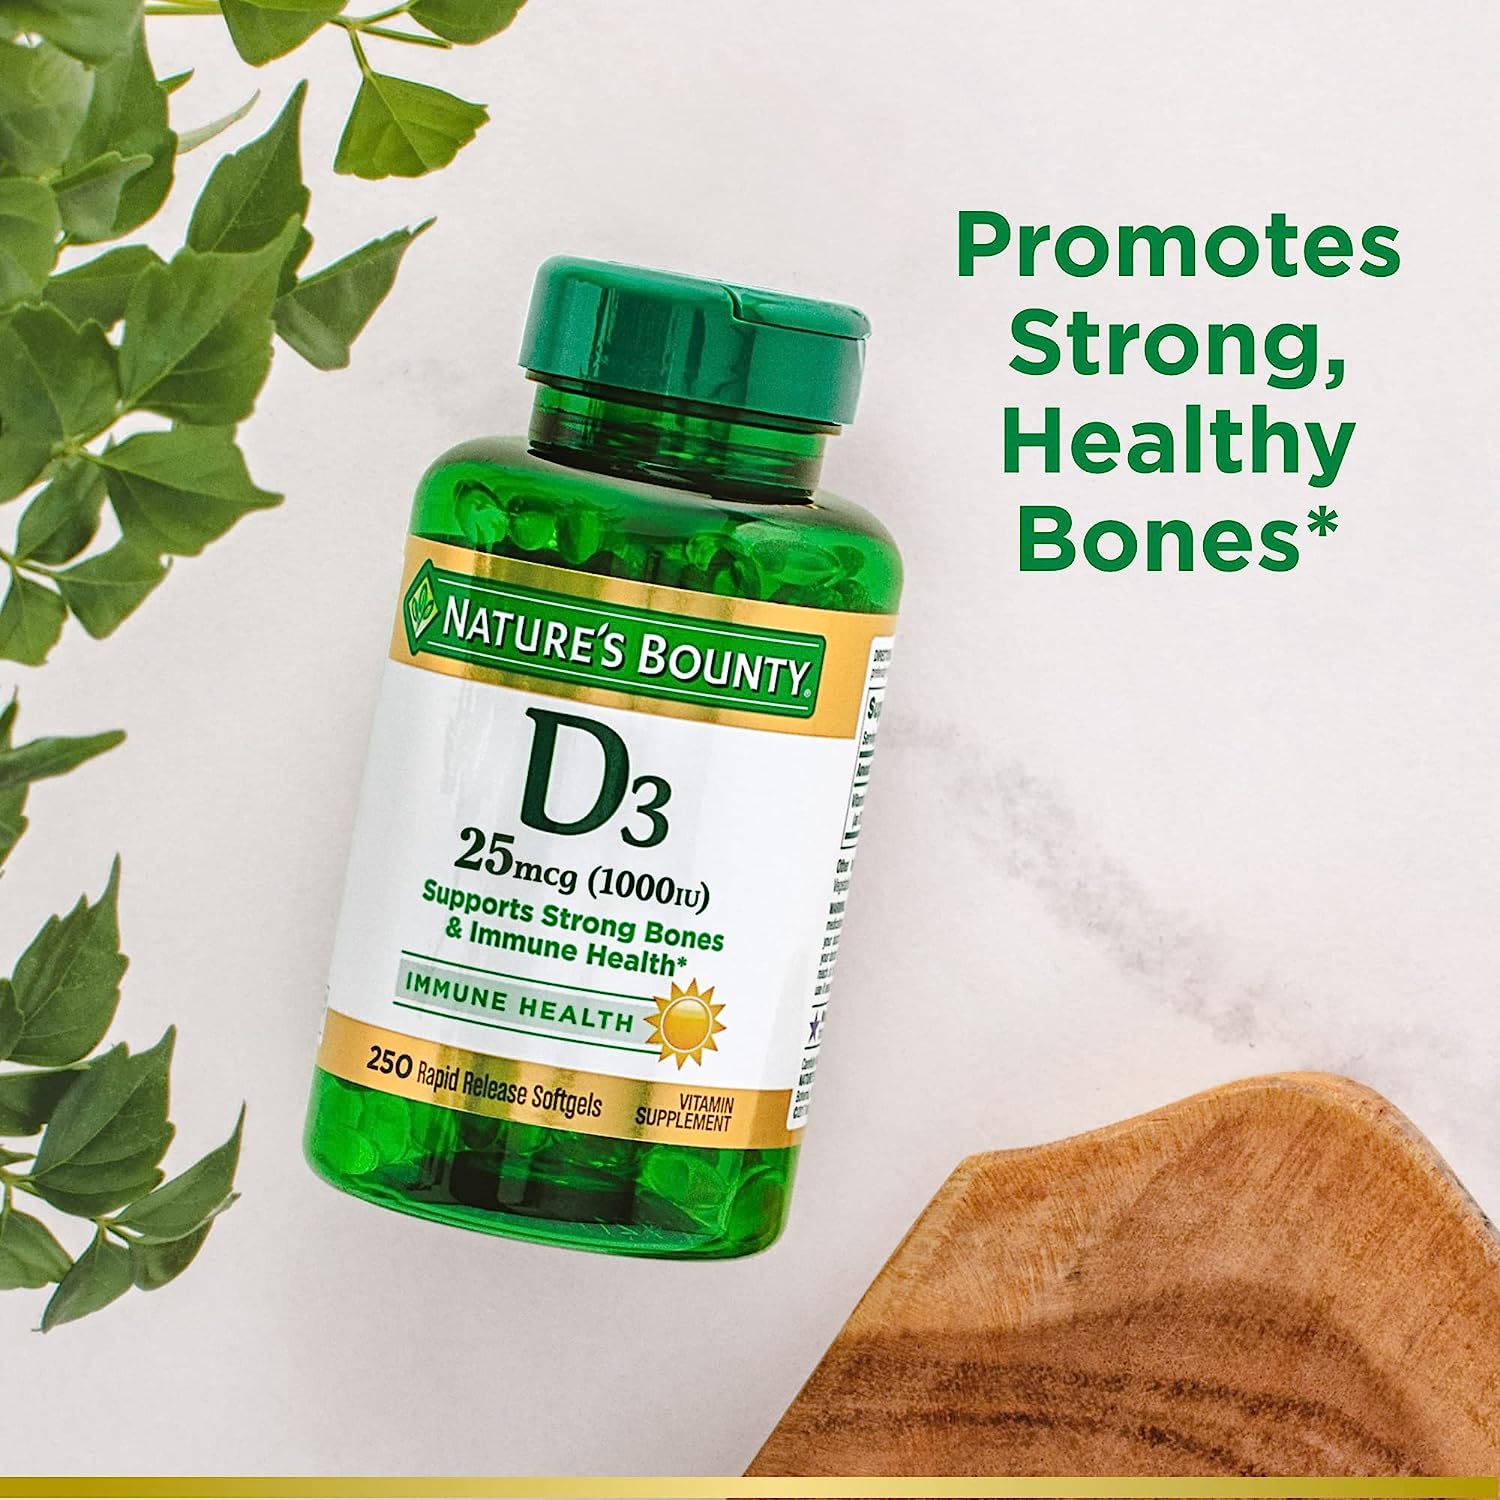 Nature’s Bounty Vitamin D3 1000 IU, Immune Support, Helps Maintain Healthy Bones, 250 Rapid Release Softgels